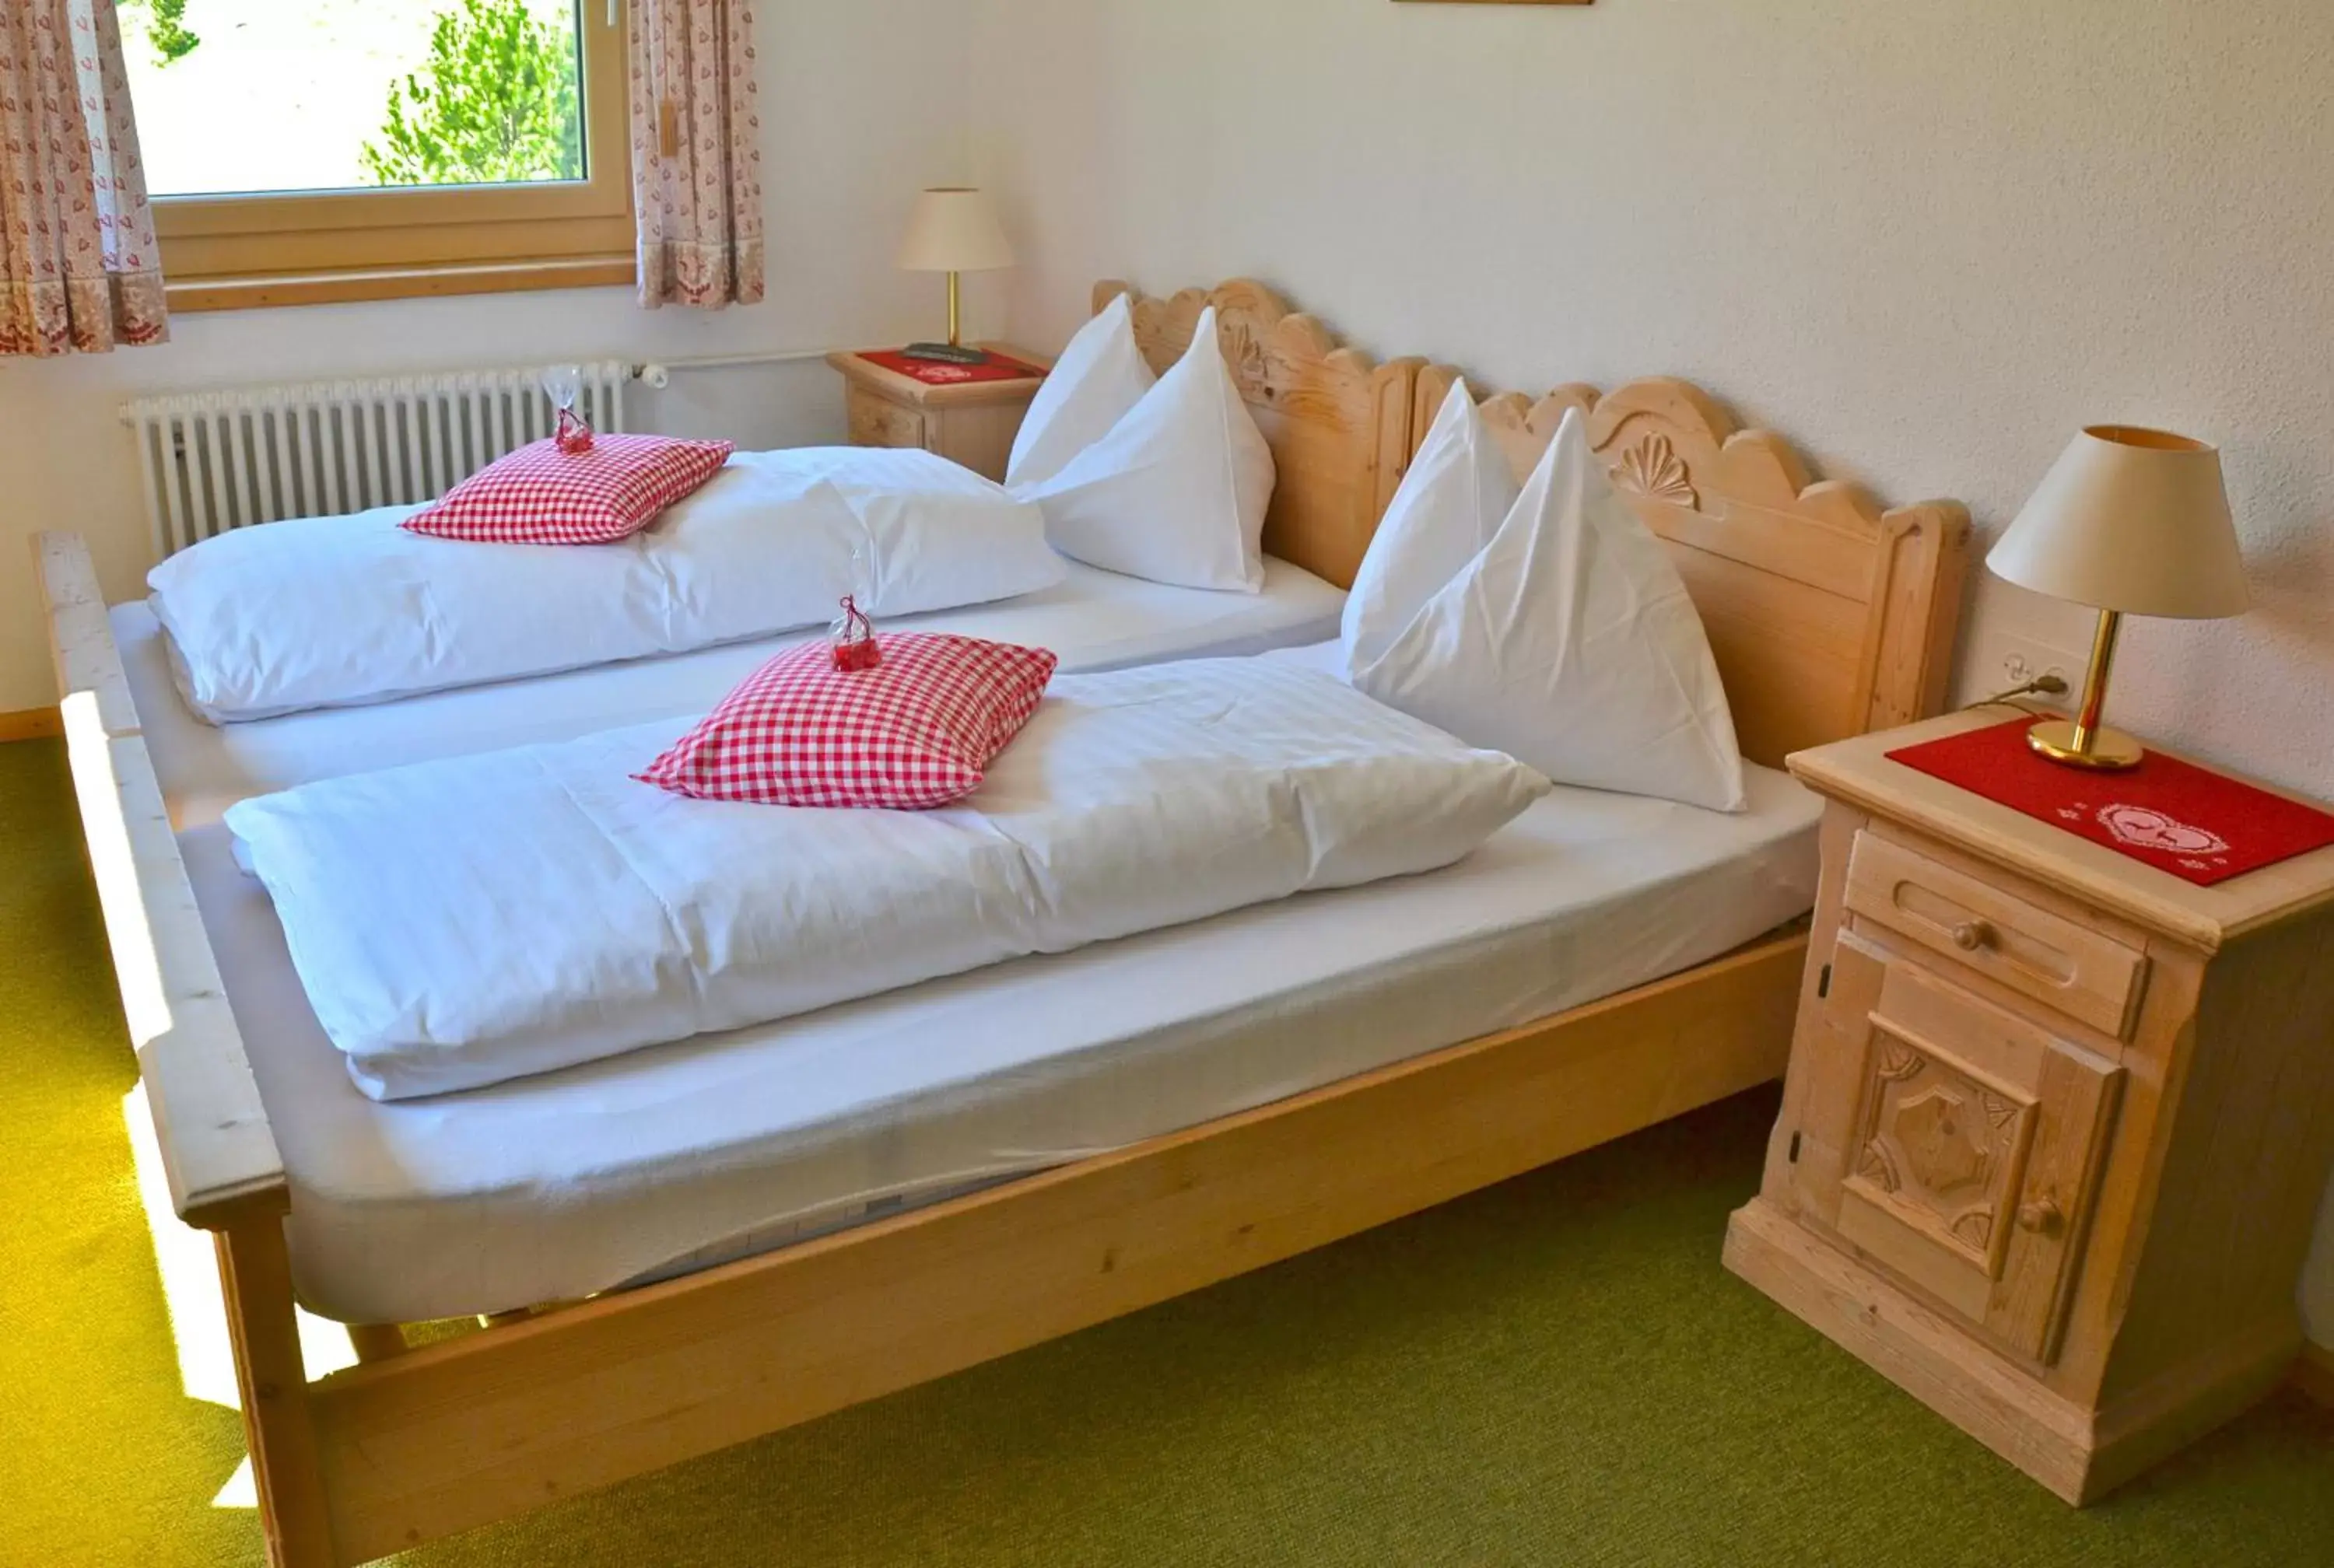 Bed, Room Photo in Hotel Roseg-Gletscher